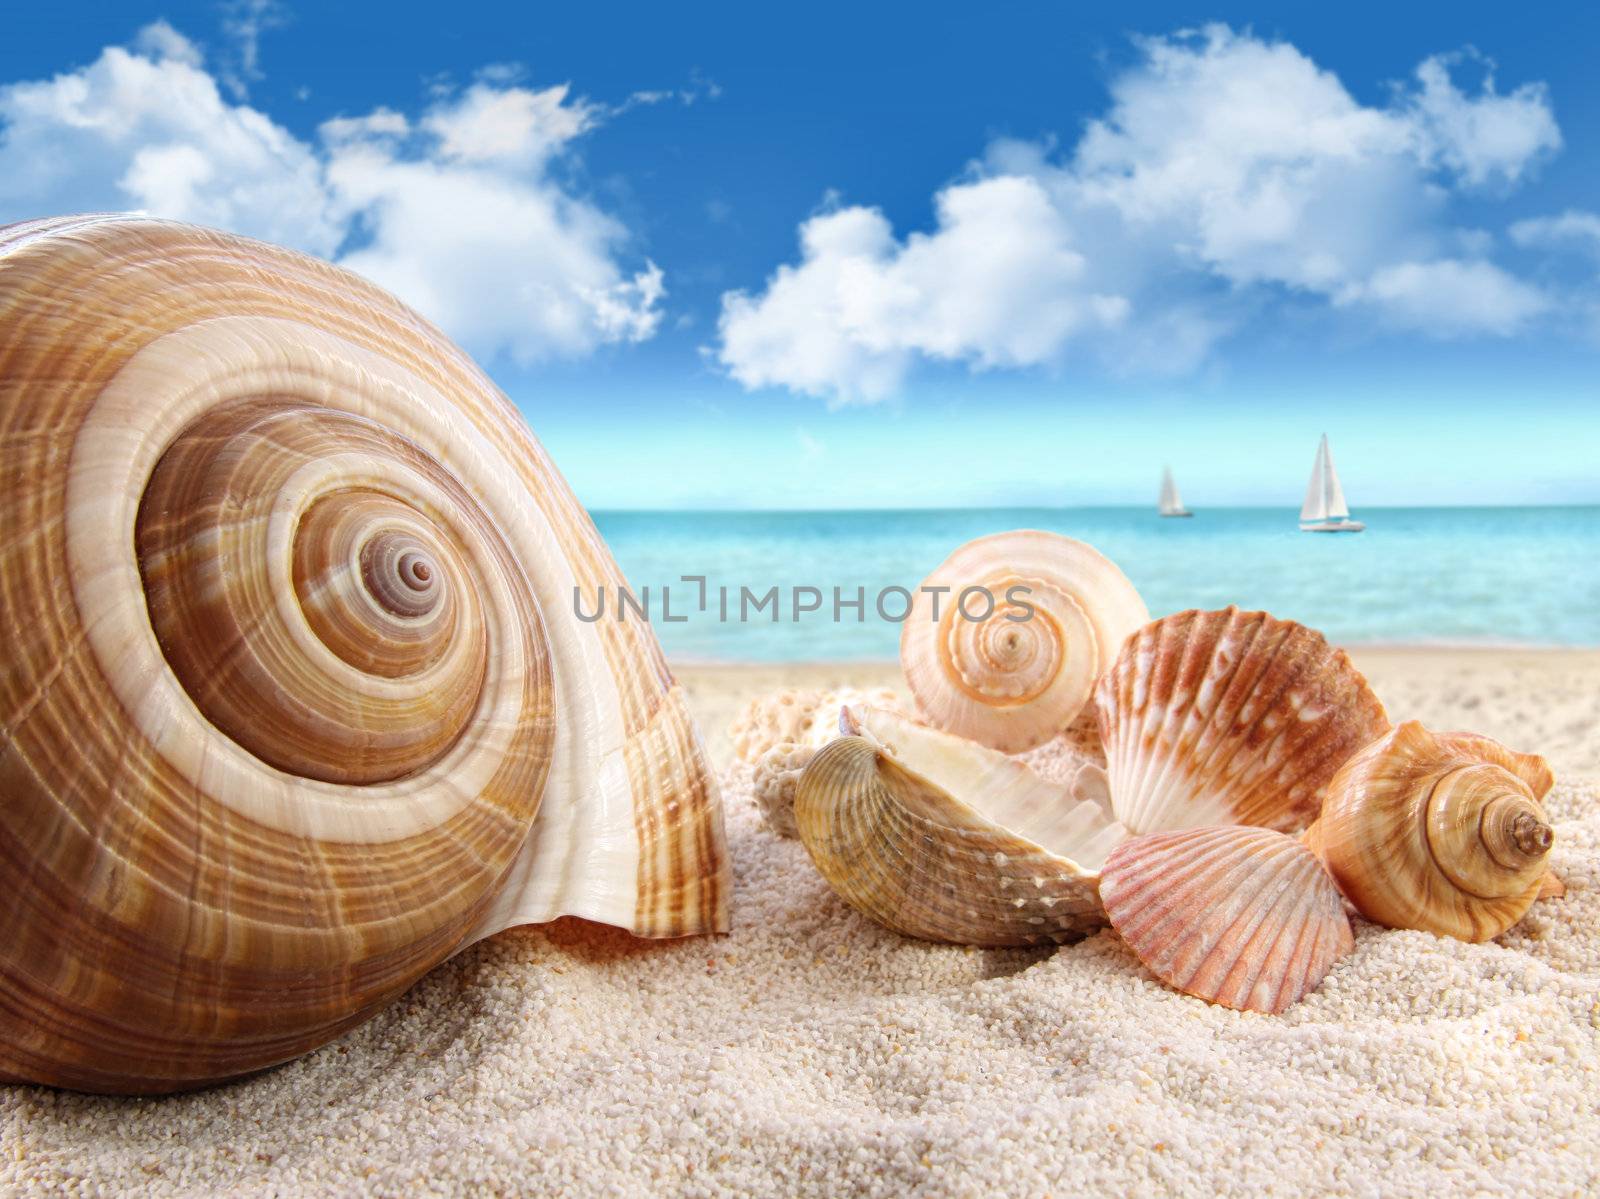 Group of seashells on the beach